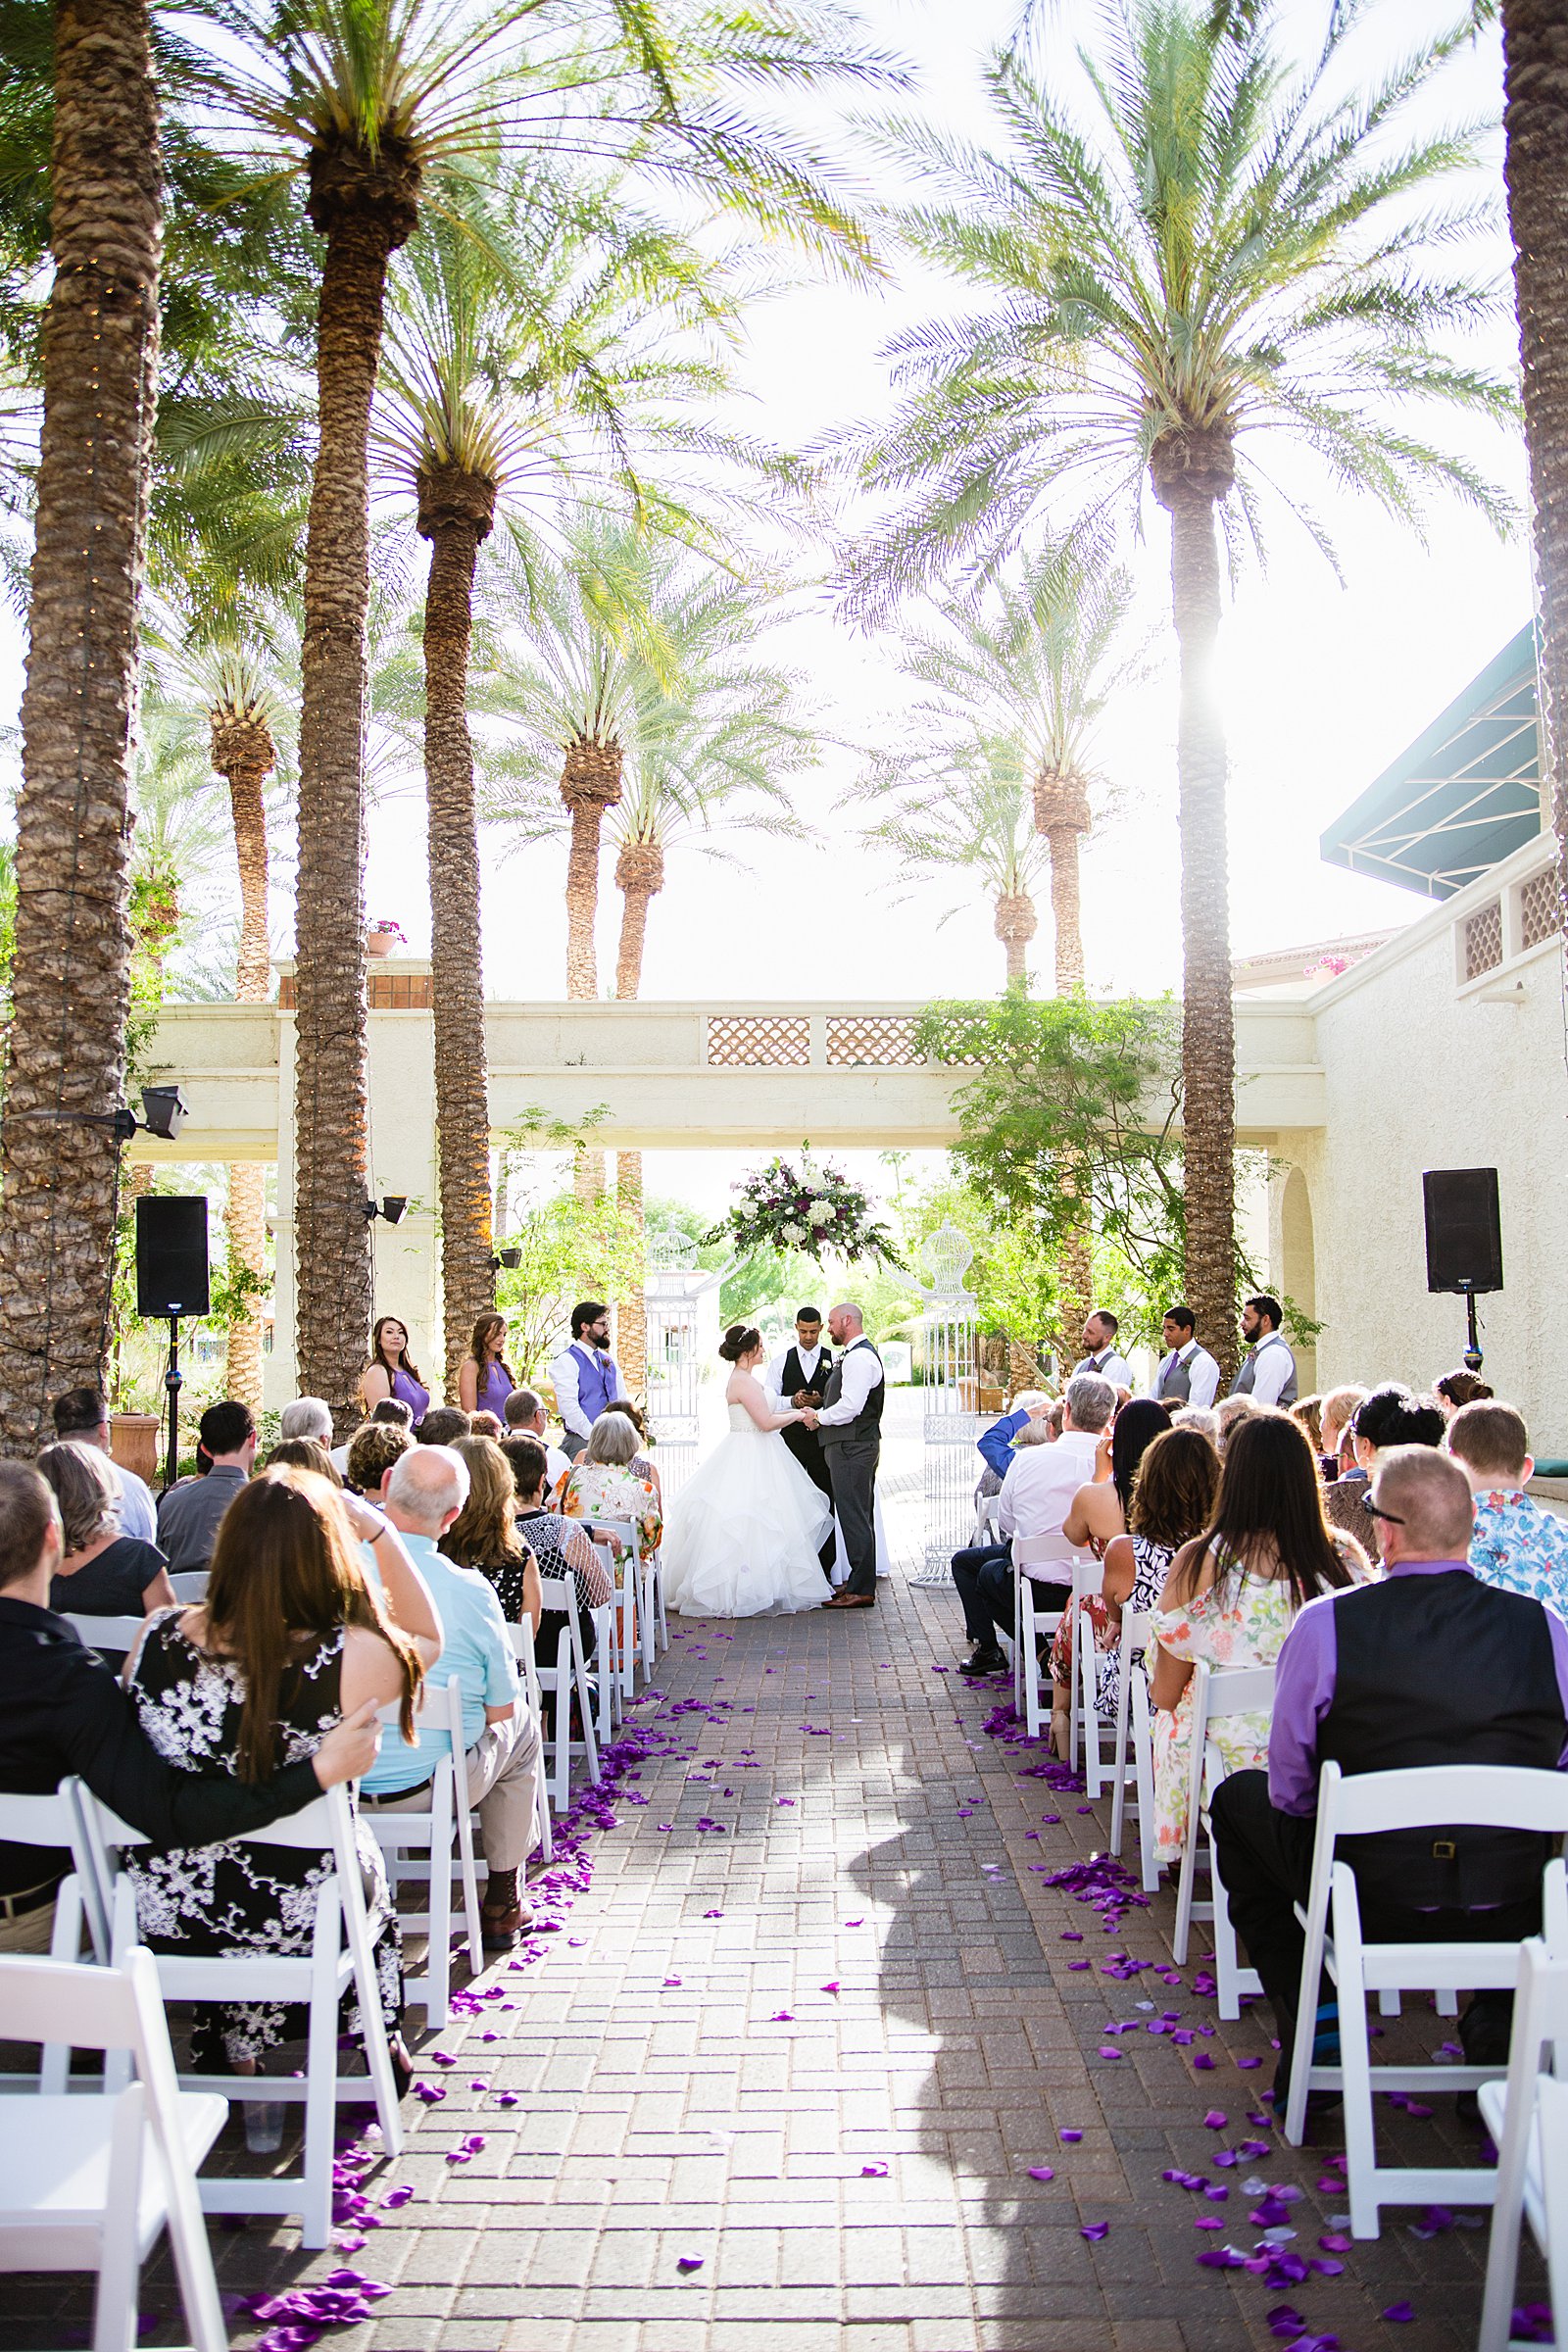 Wedding ceremony at Arizona Grand Resort by Phoenix wedding photographer PMA Photography.